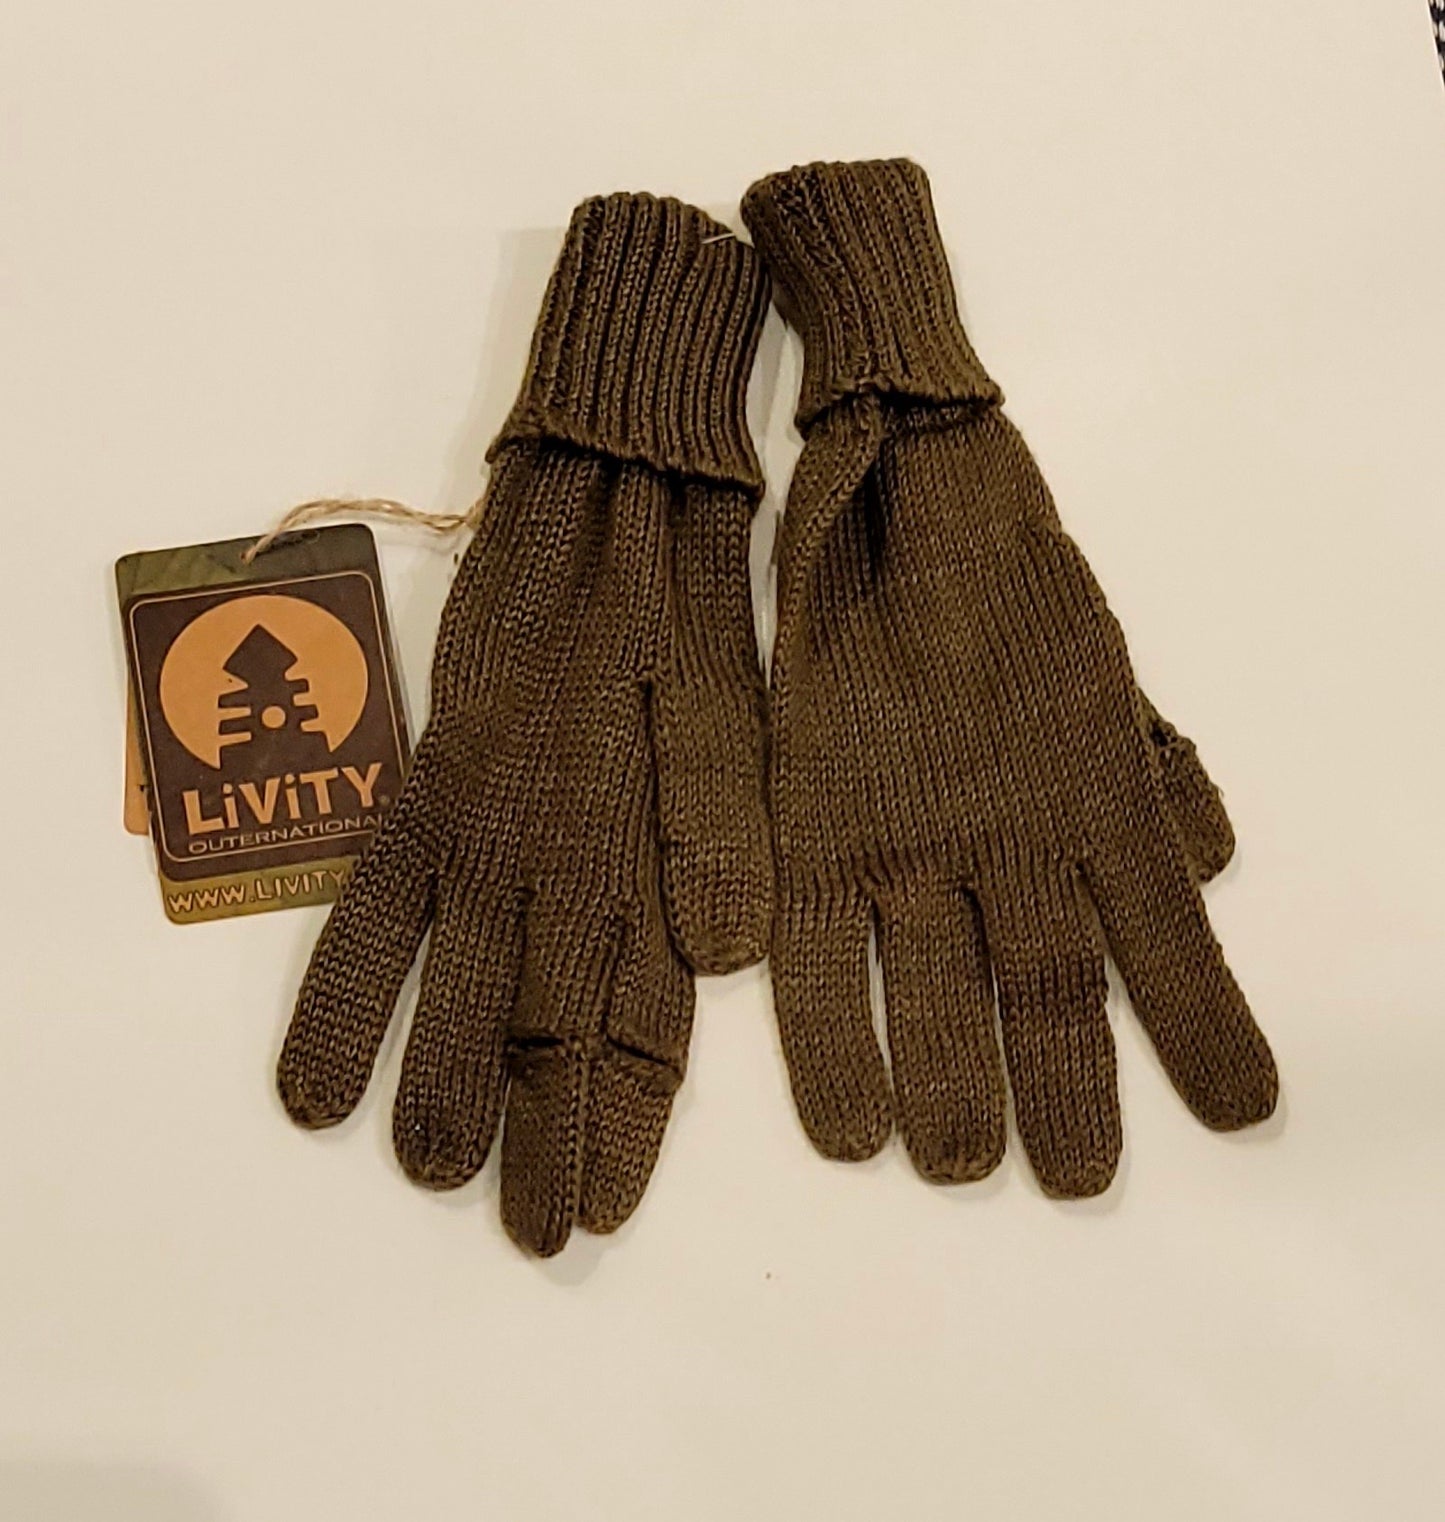 Livity Digi Access Gloves